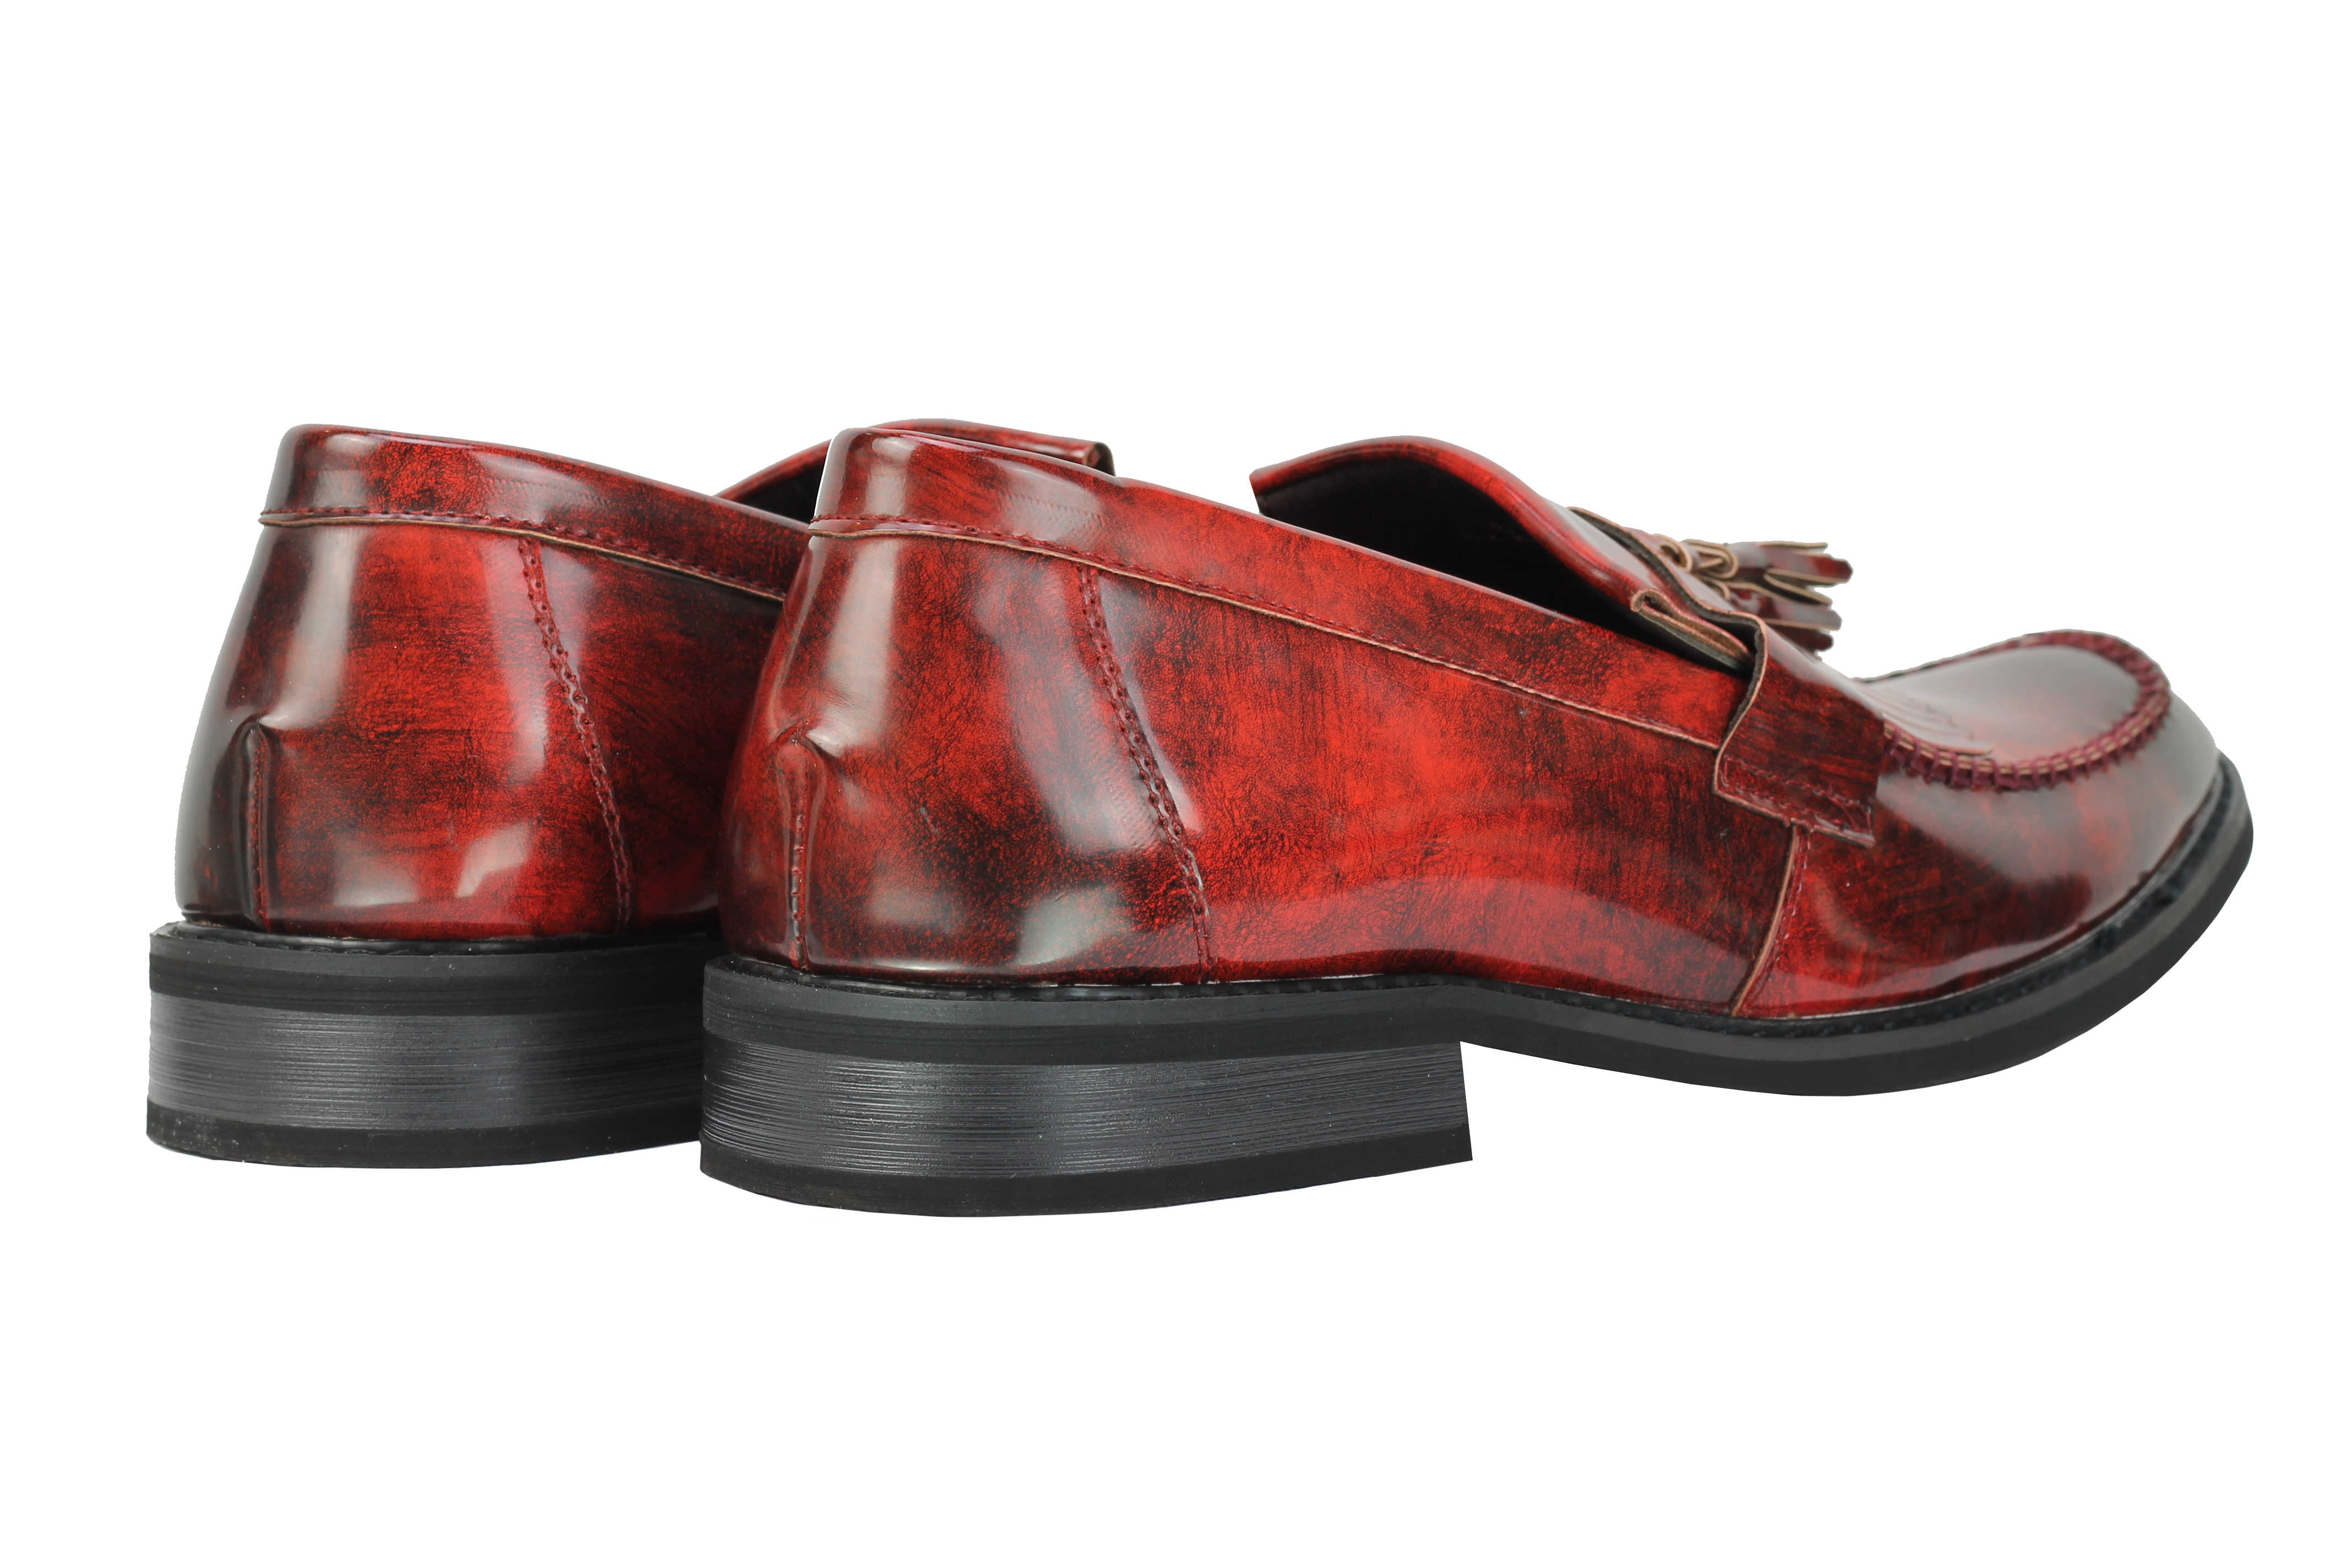 Men's MOD Retro Vintage Style Polished Faux Leather Tassel Loafers Shoes UK 7-11 